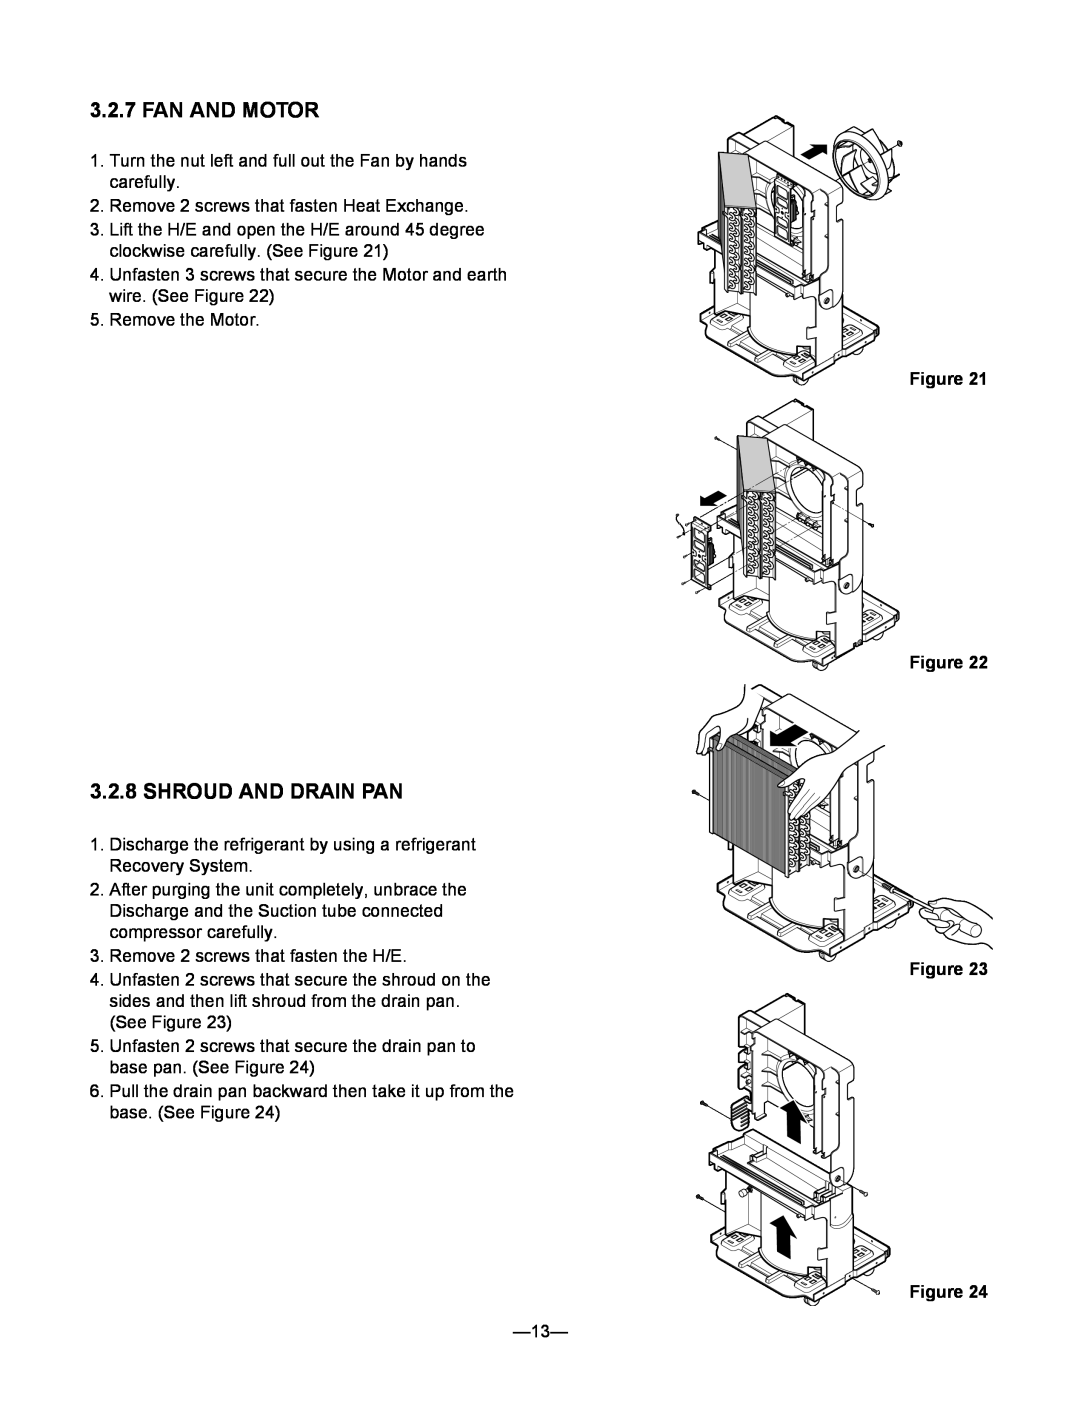 Heat Controller BHD-301-D, BHD-651-D, BHD-501-D Fan And Motor, Shroud And Drain Pan, Figure Figure Figure Figure 